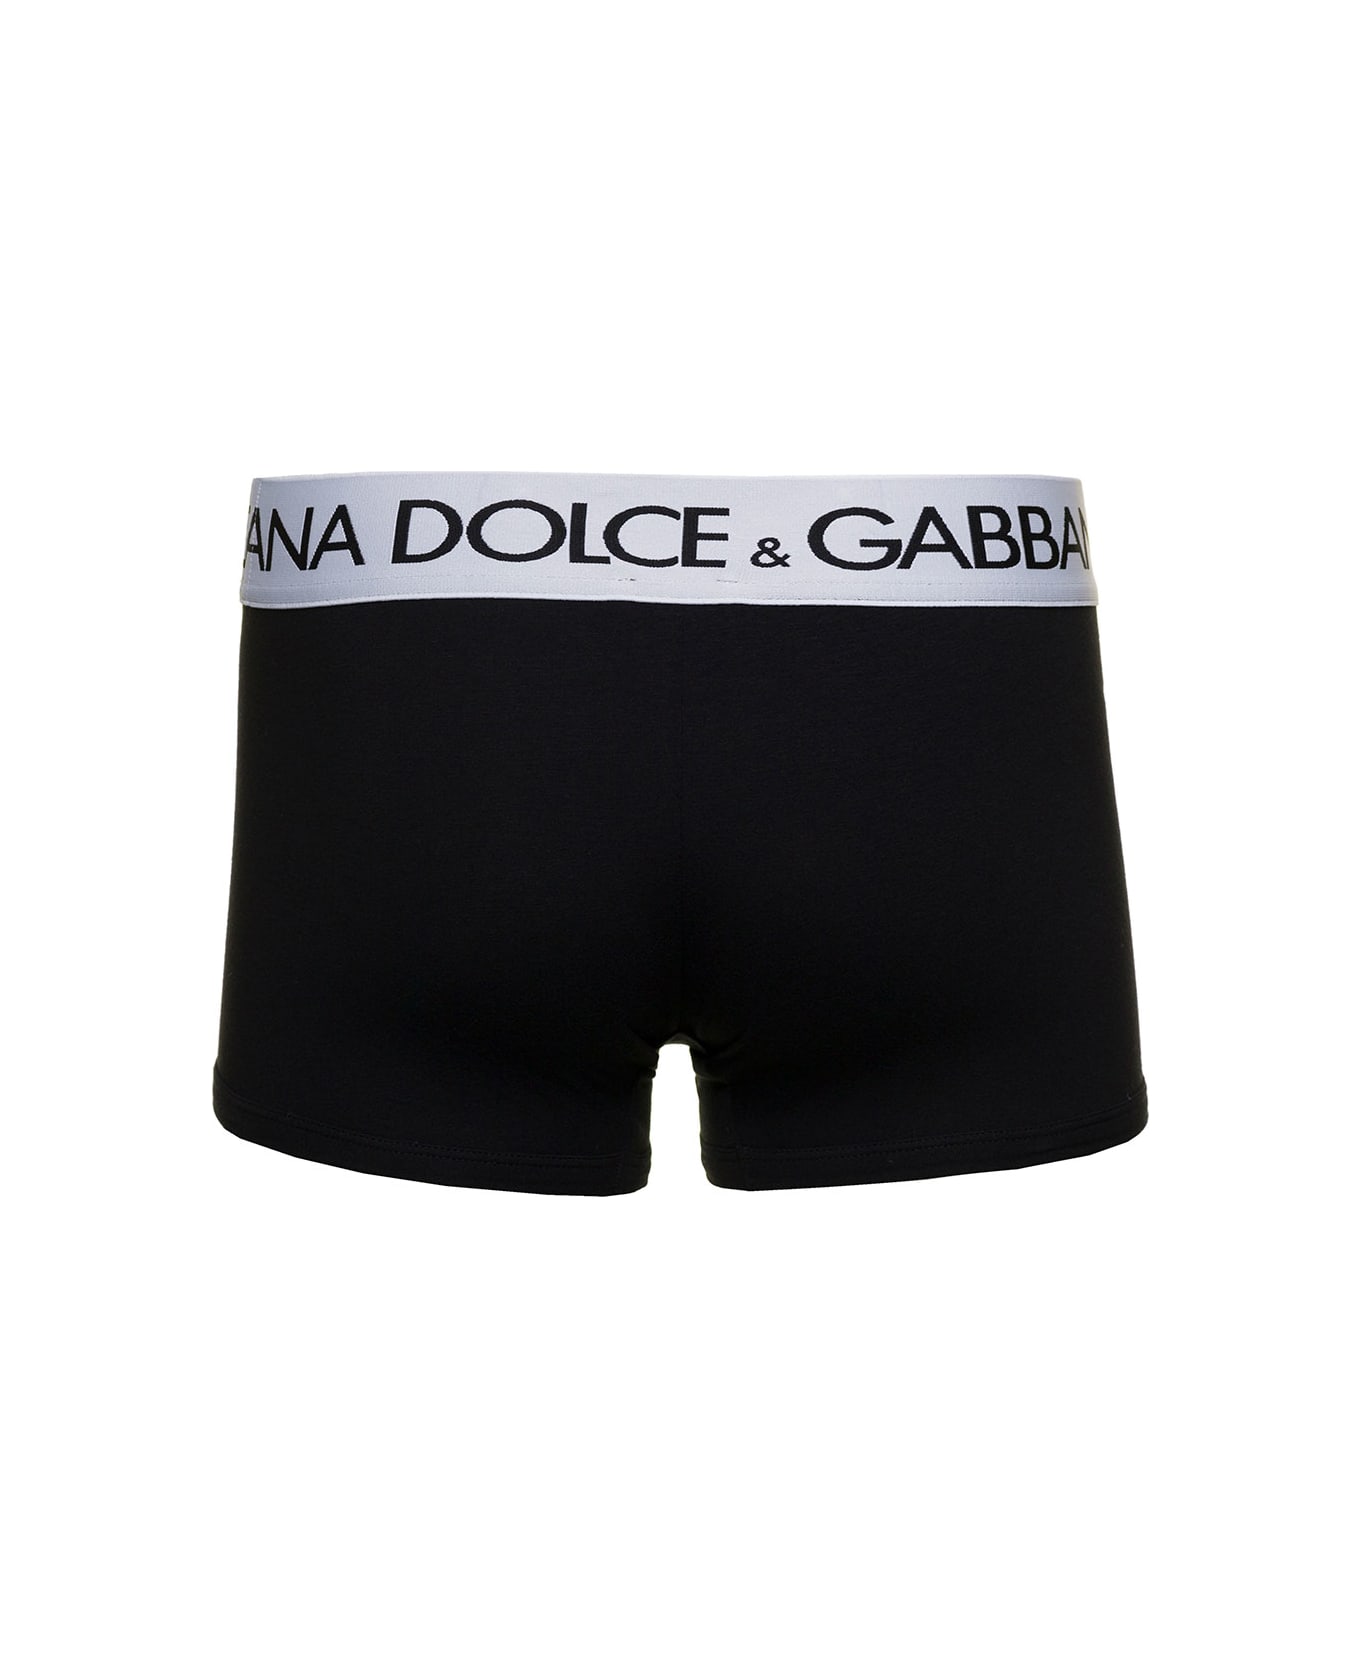 Dolce & Gabbana Black Boxer Briefs With Branded Waistband In Stretch Cotton Man - Black